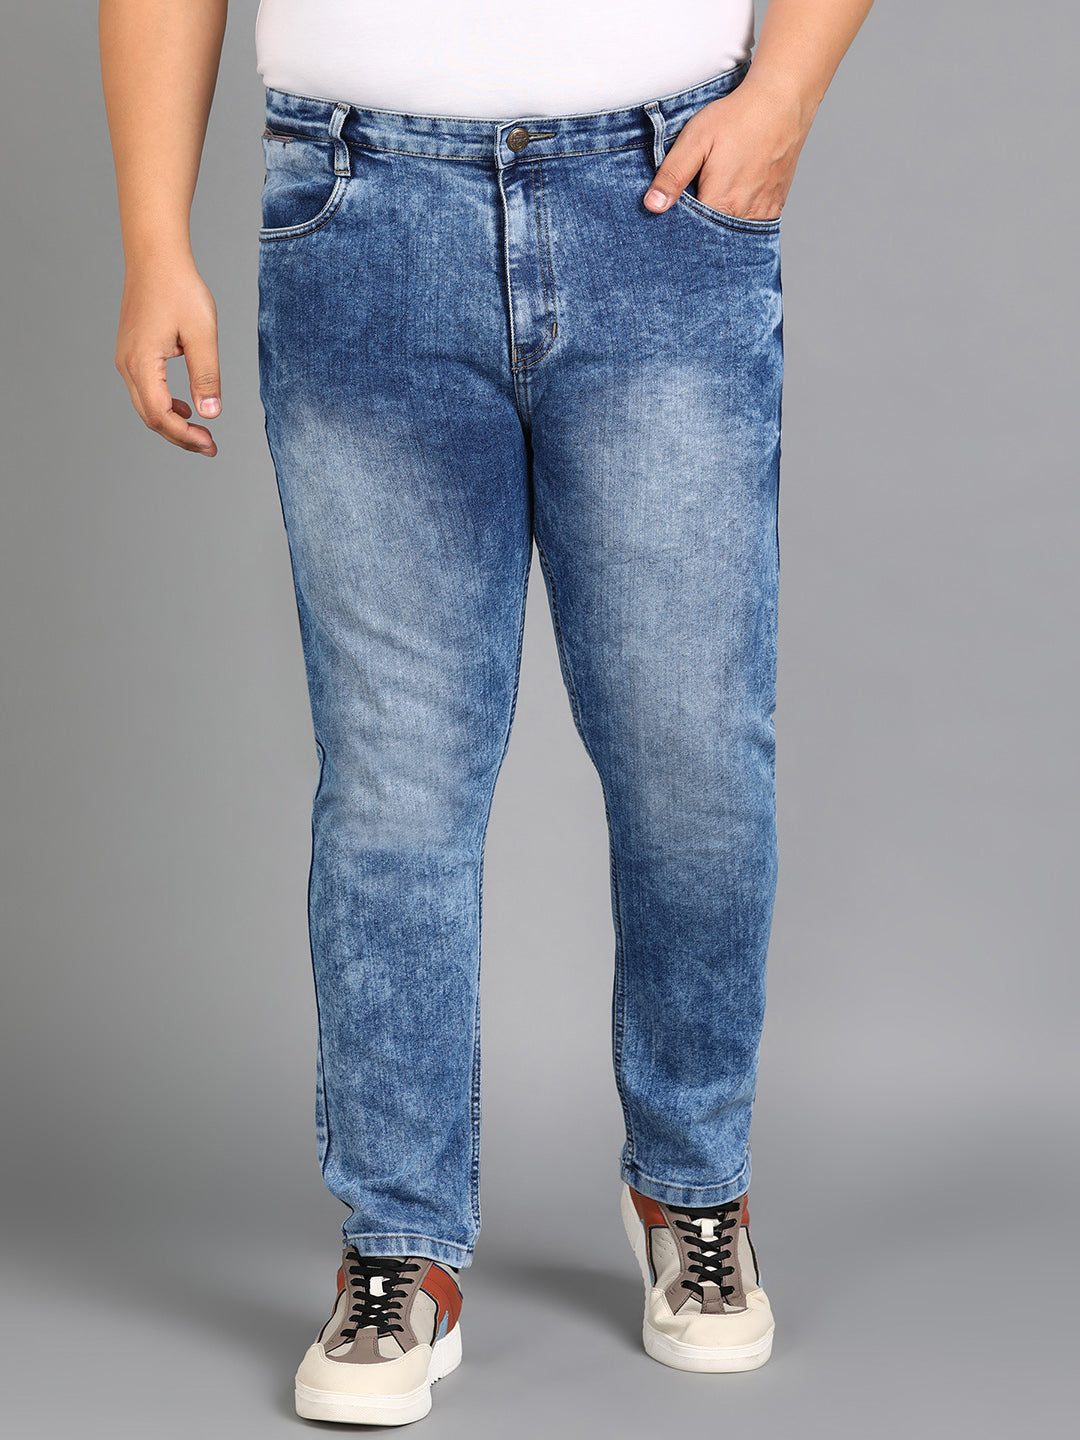 Plus Men's Blue Slim Fit Washed Jeans Stretchable